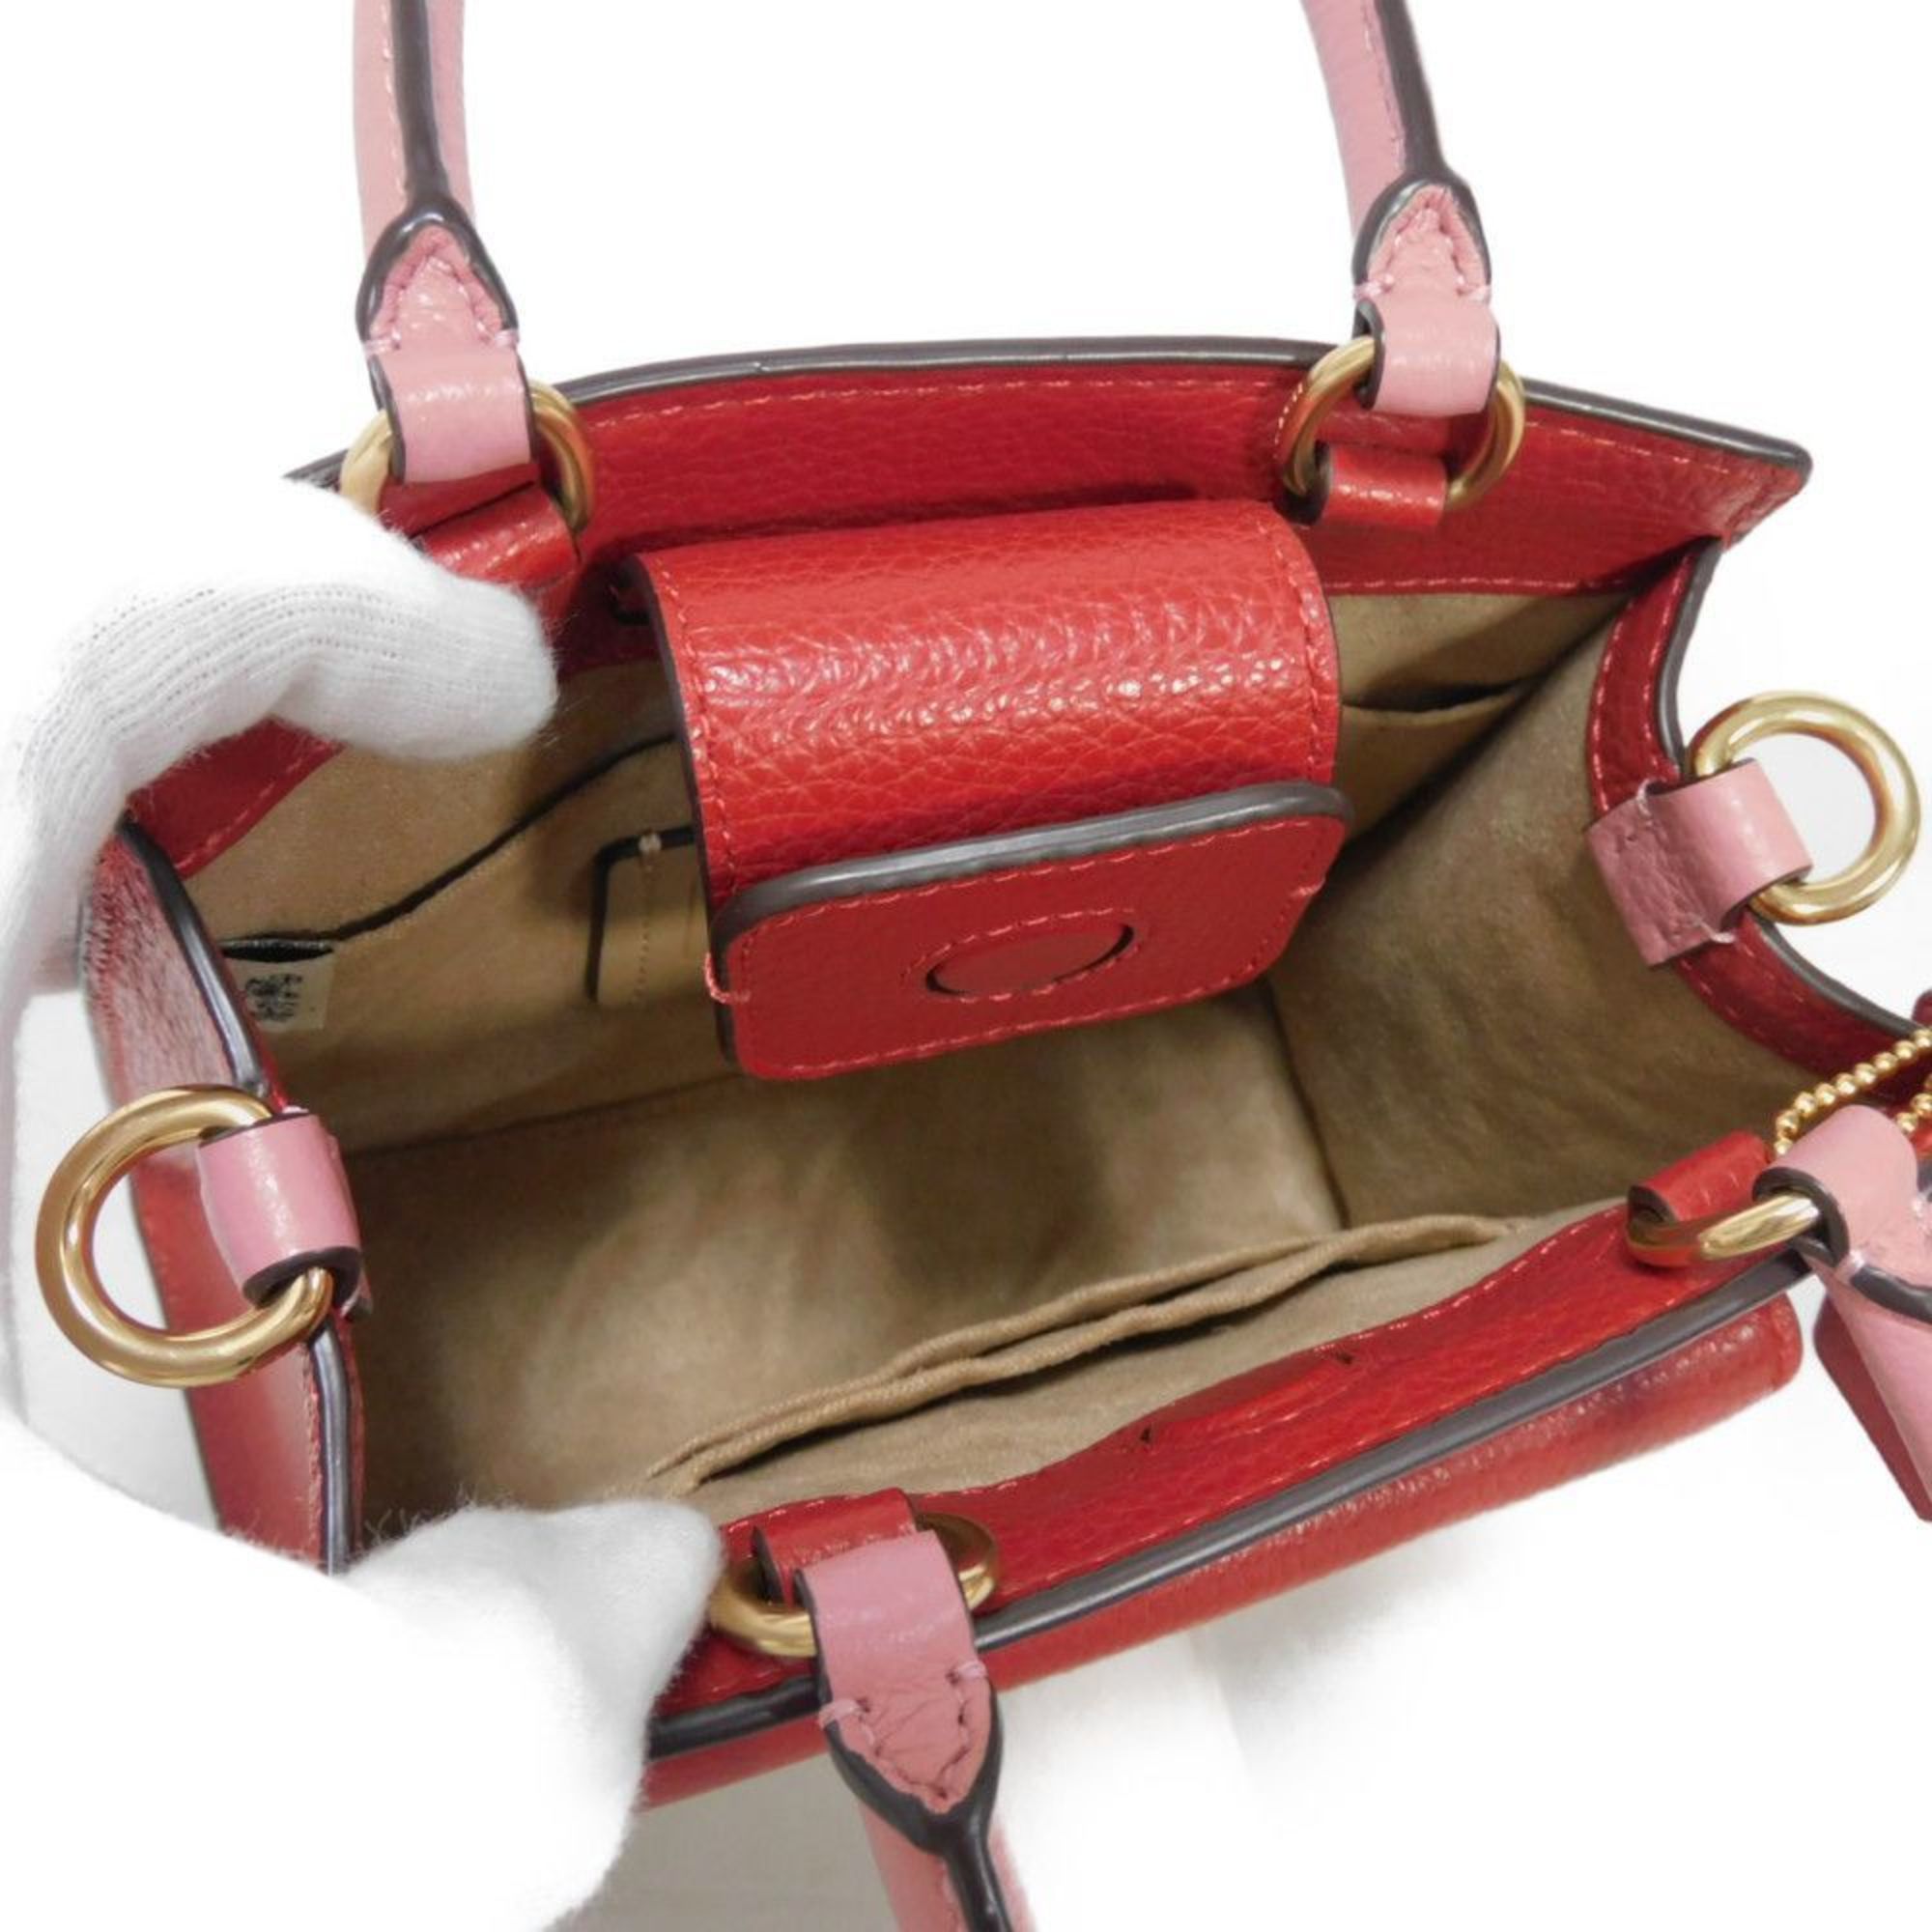 COACH Handbag Pepper Crossbody Color Block Red Ivory Chain Shoulder Bag C6994 Women's